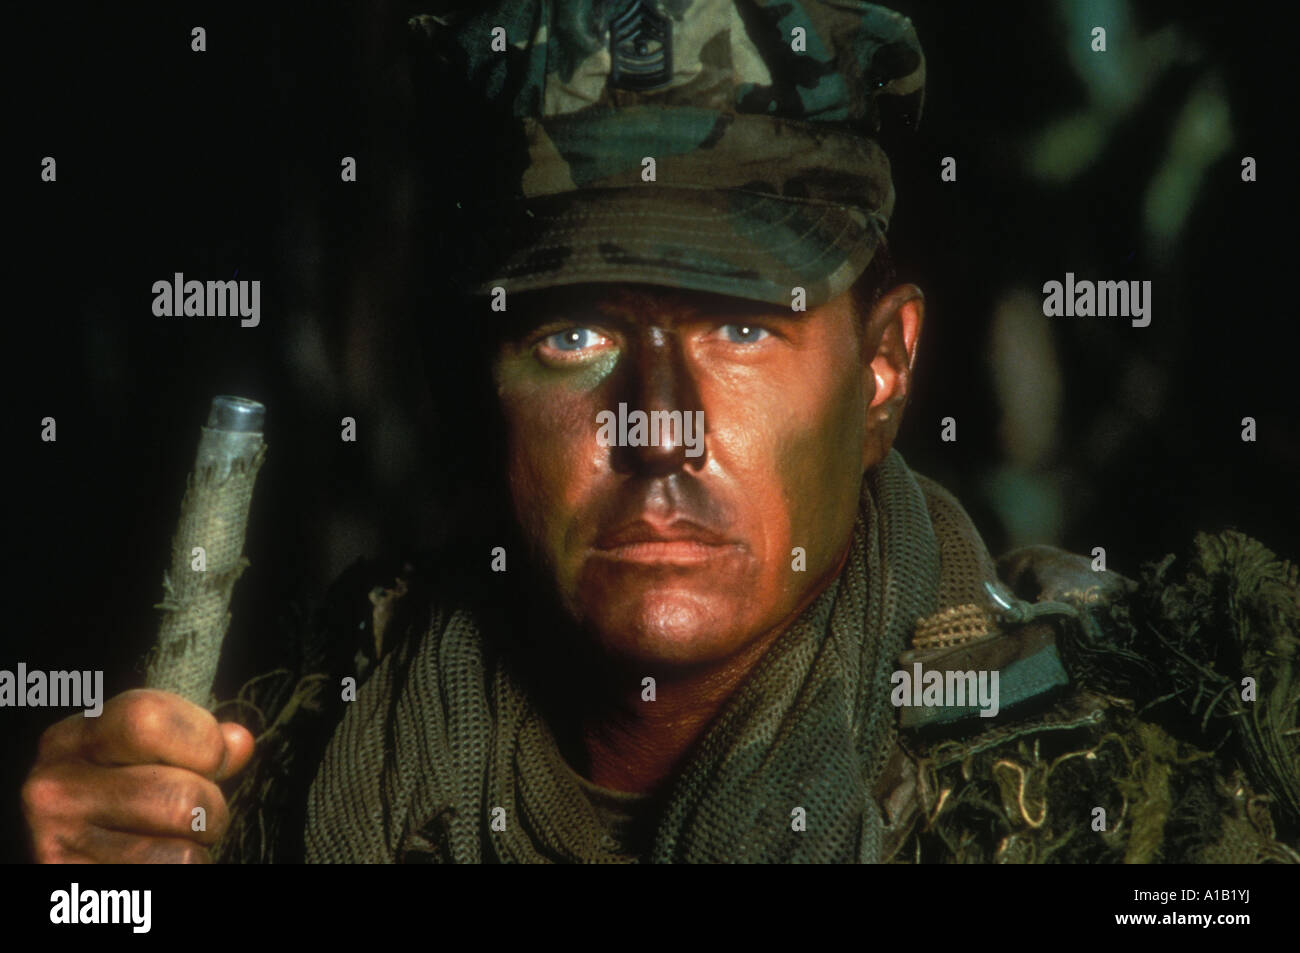 Download preview image - sniper-year-1993-director-luis-llosa-tom-berenger-A1B1YJ